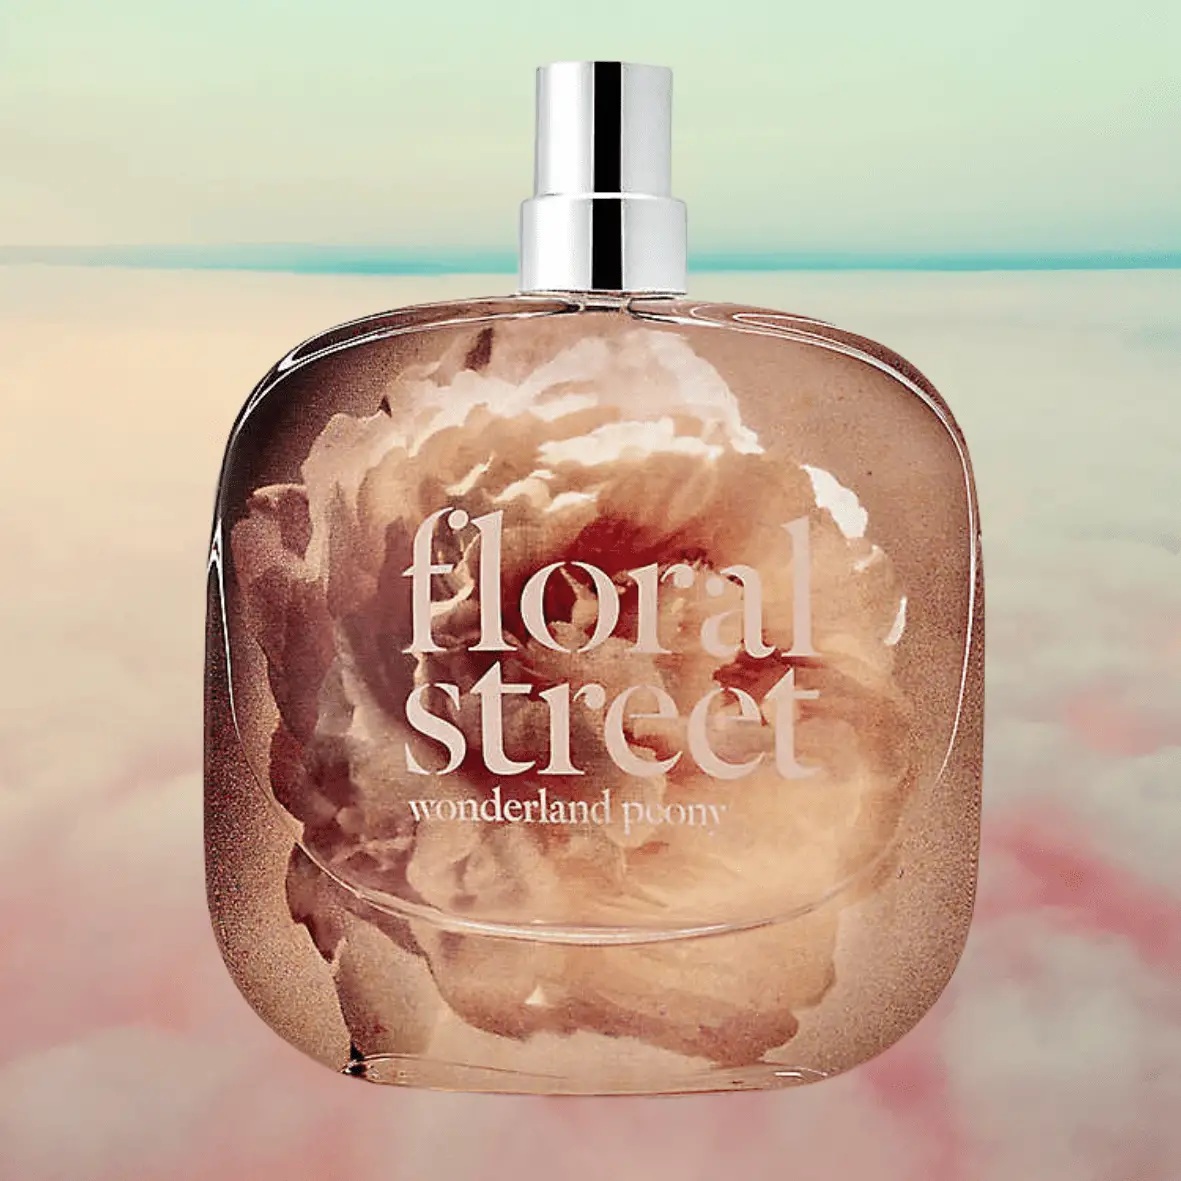 Floral Street Wonderland Peony
Best Cotton Candy Perfumes